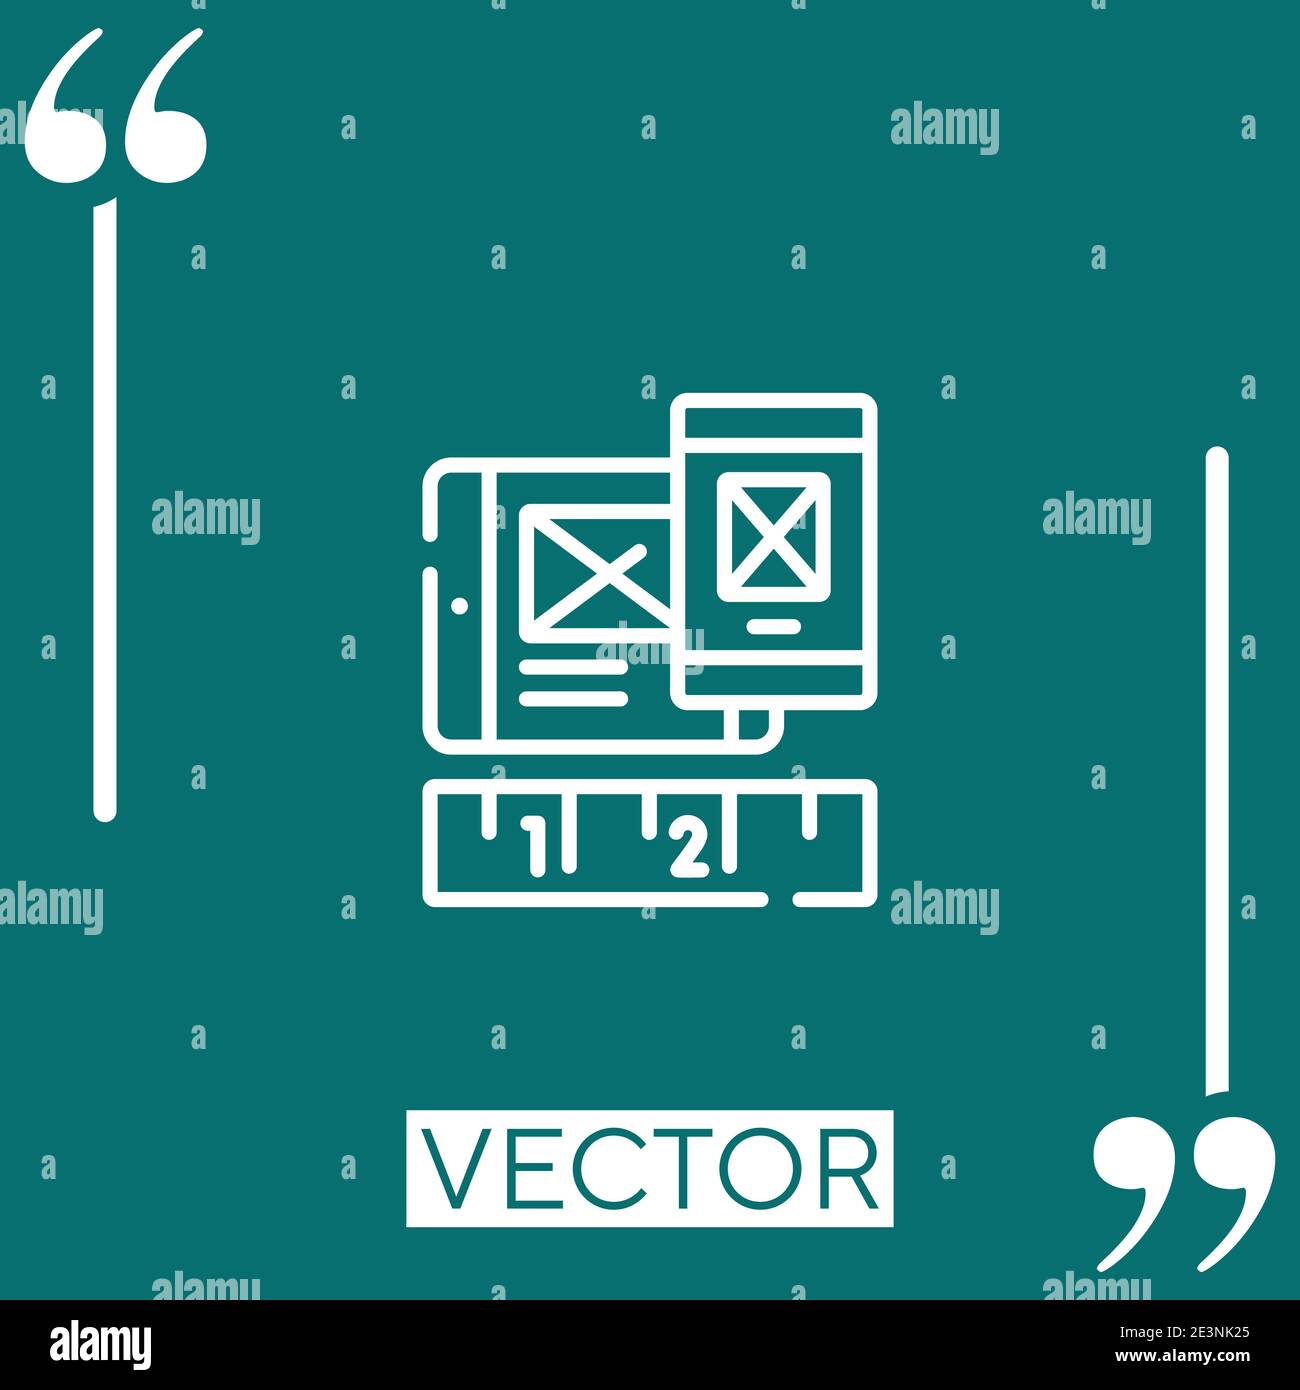 adaptive vector icon Linear icon. Editable stroke line Stock Vector